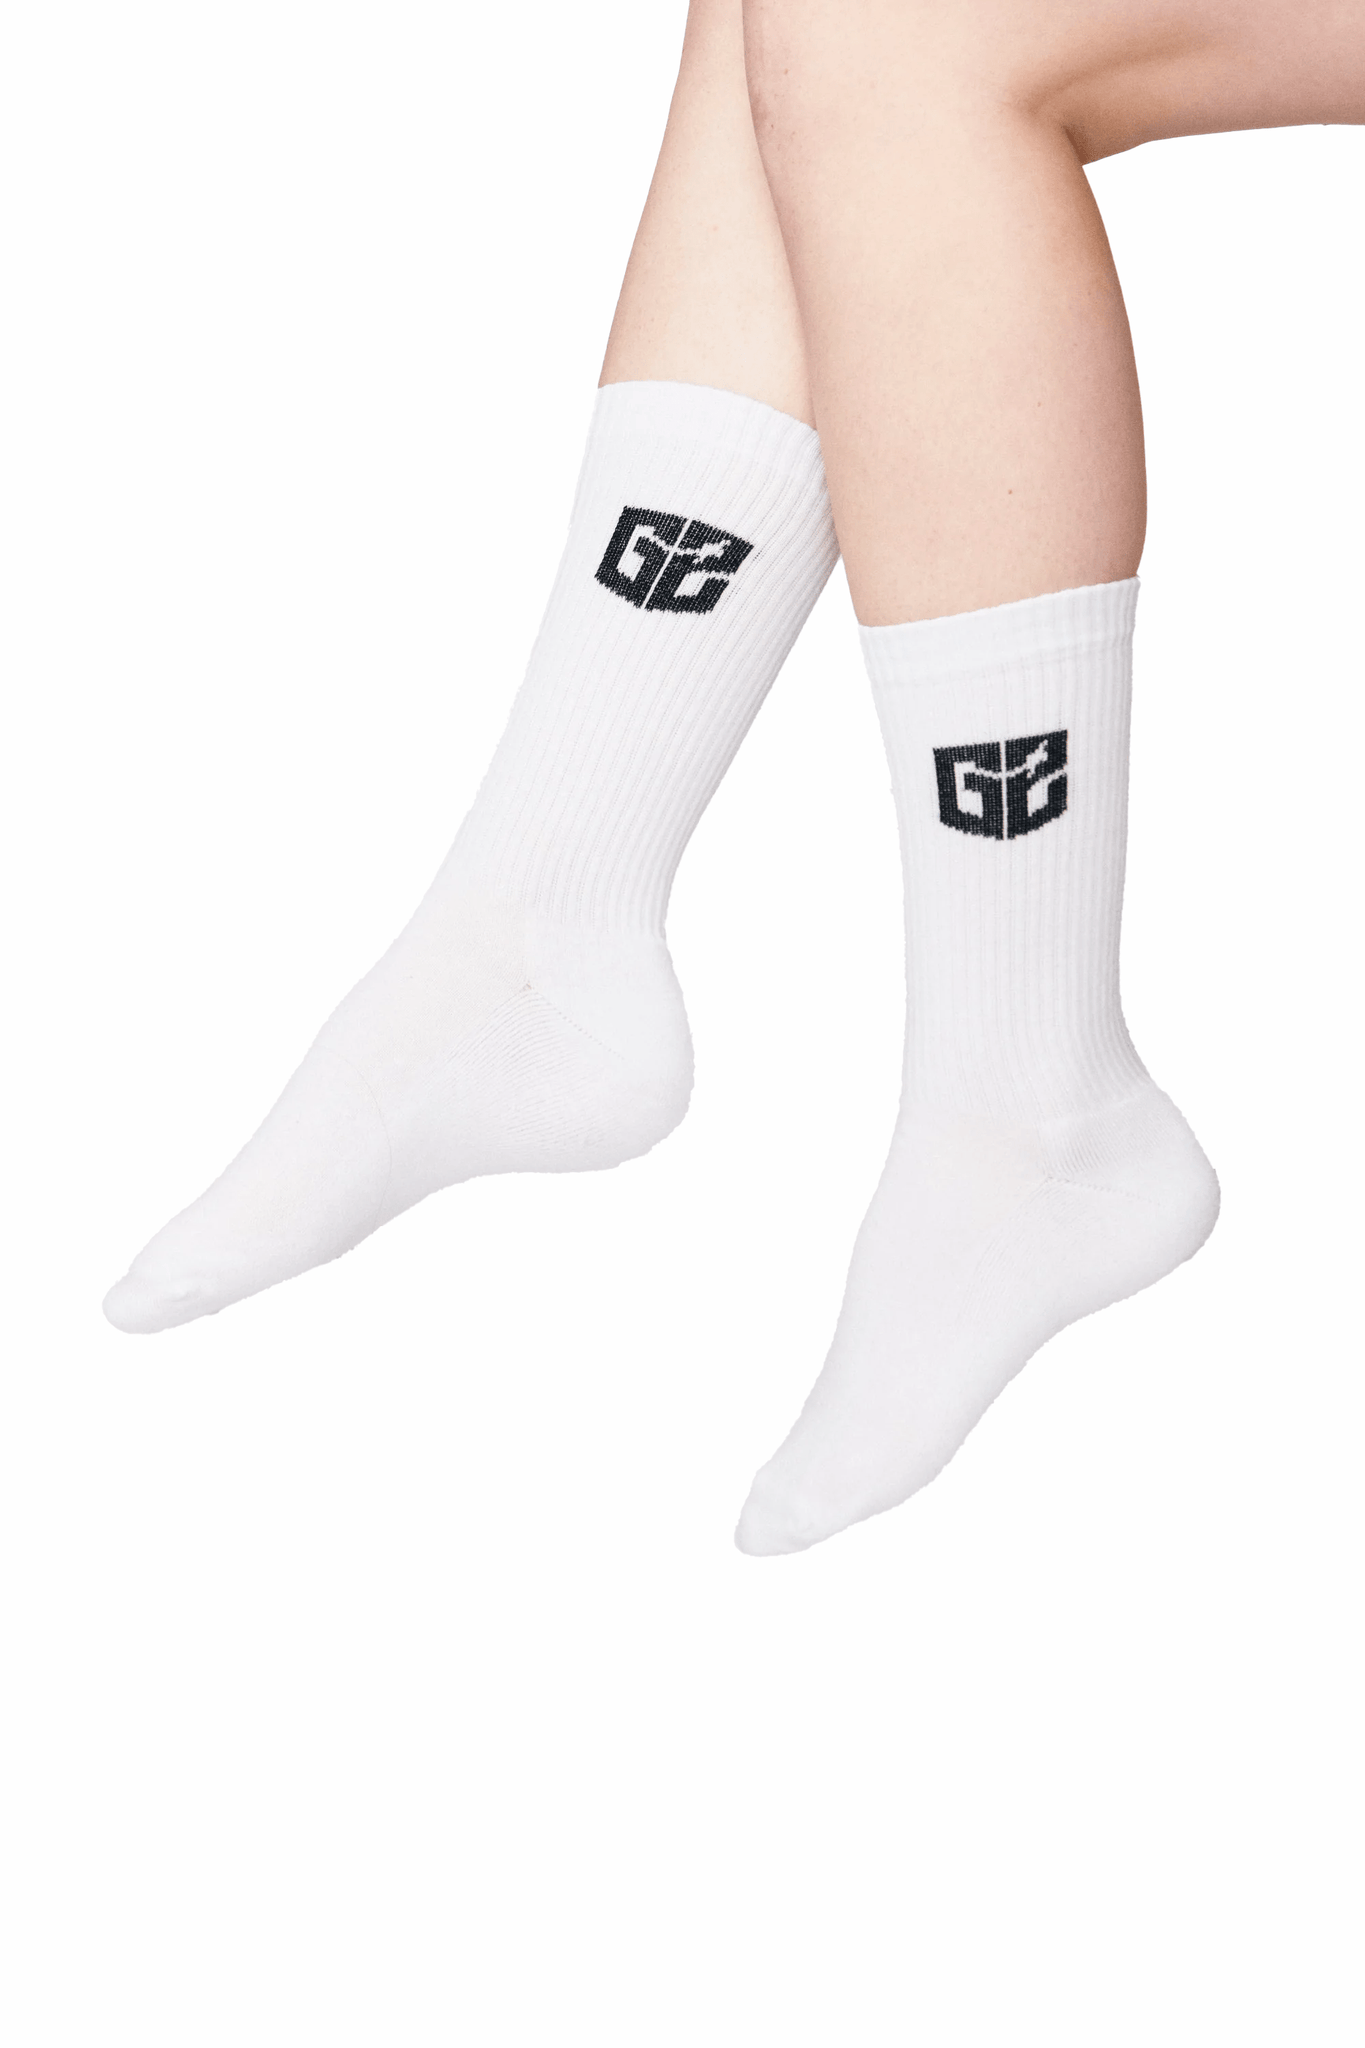 G2 ESSENTIALS - Socks 2 pack - Black / White